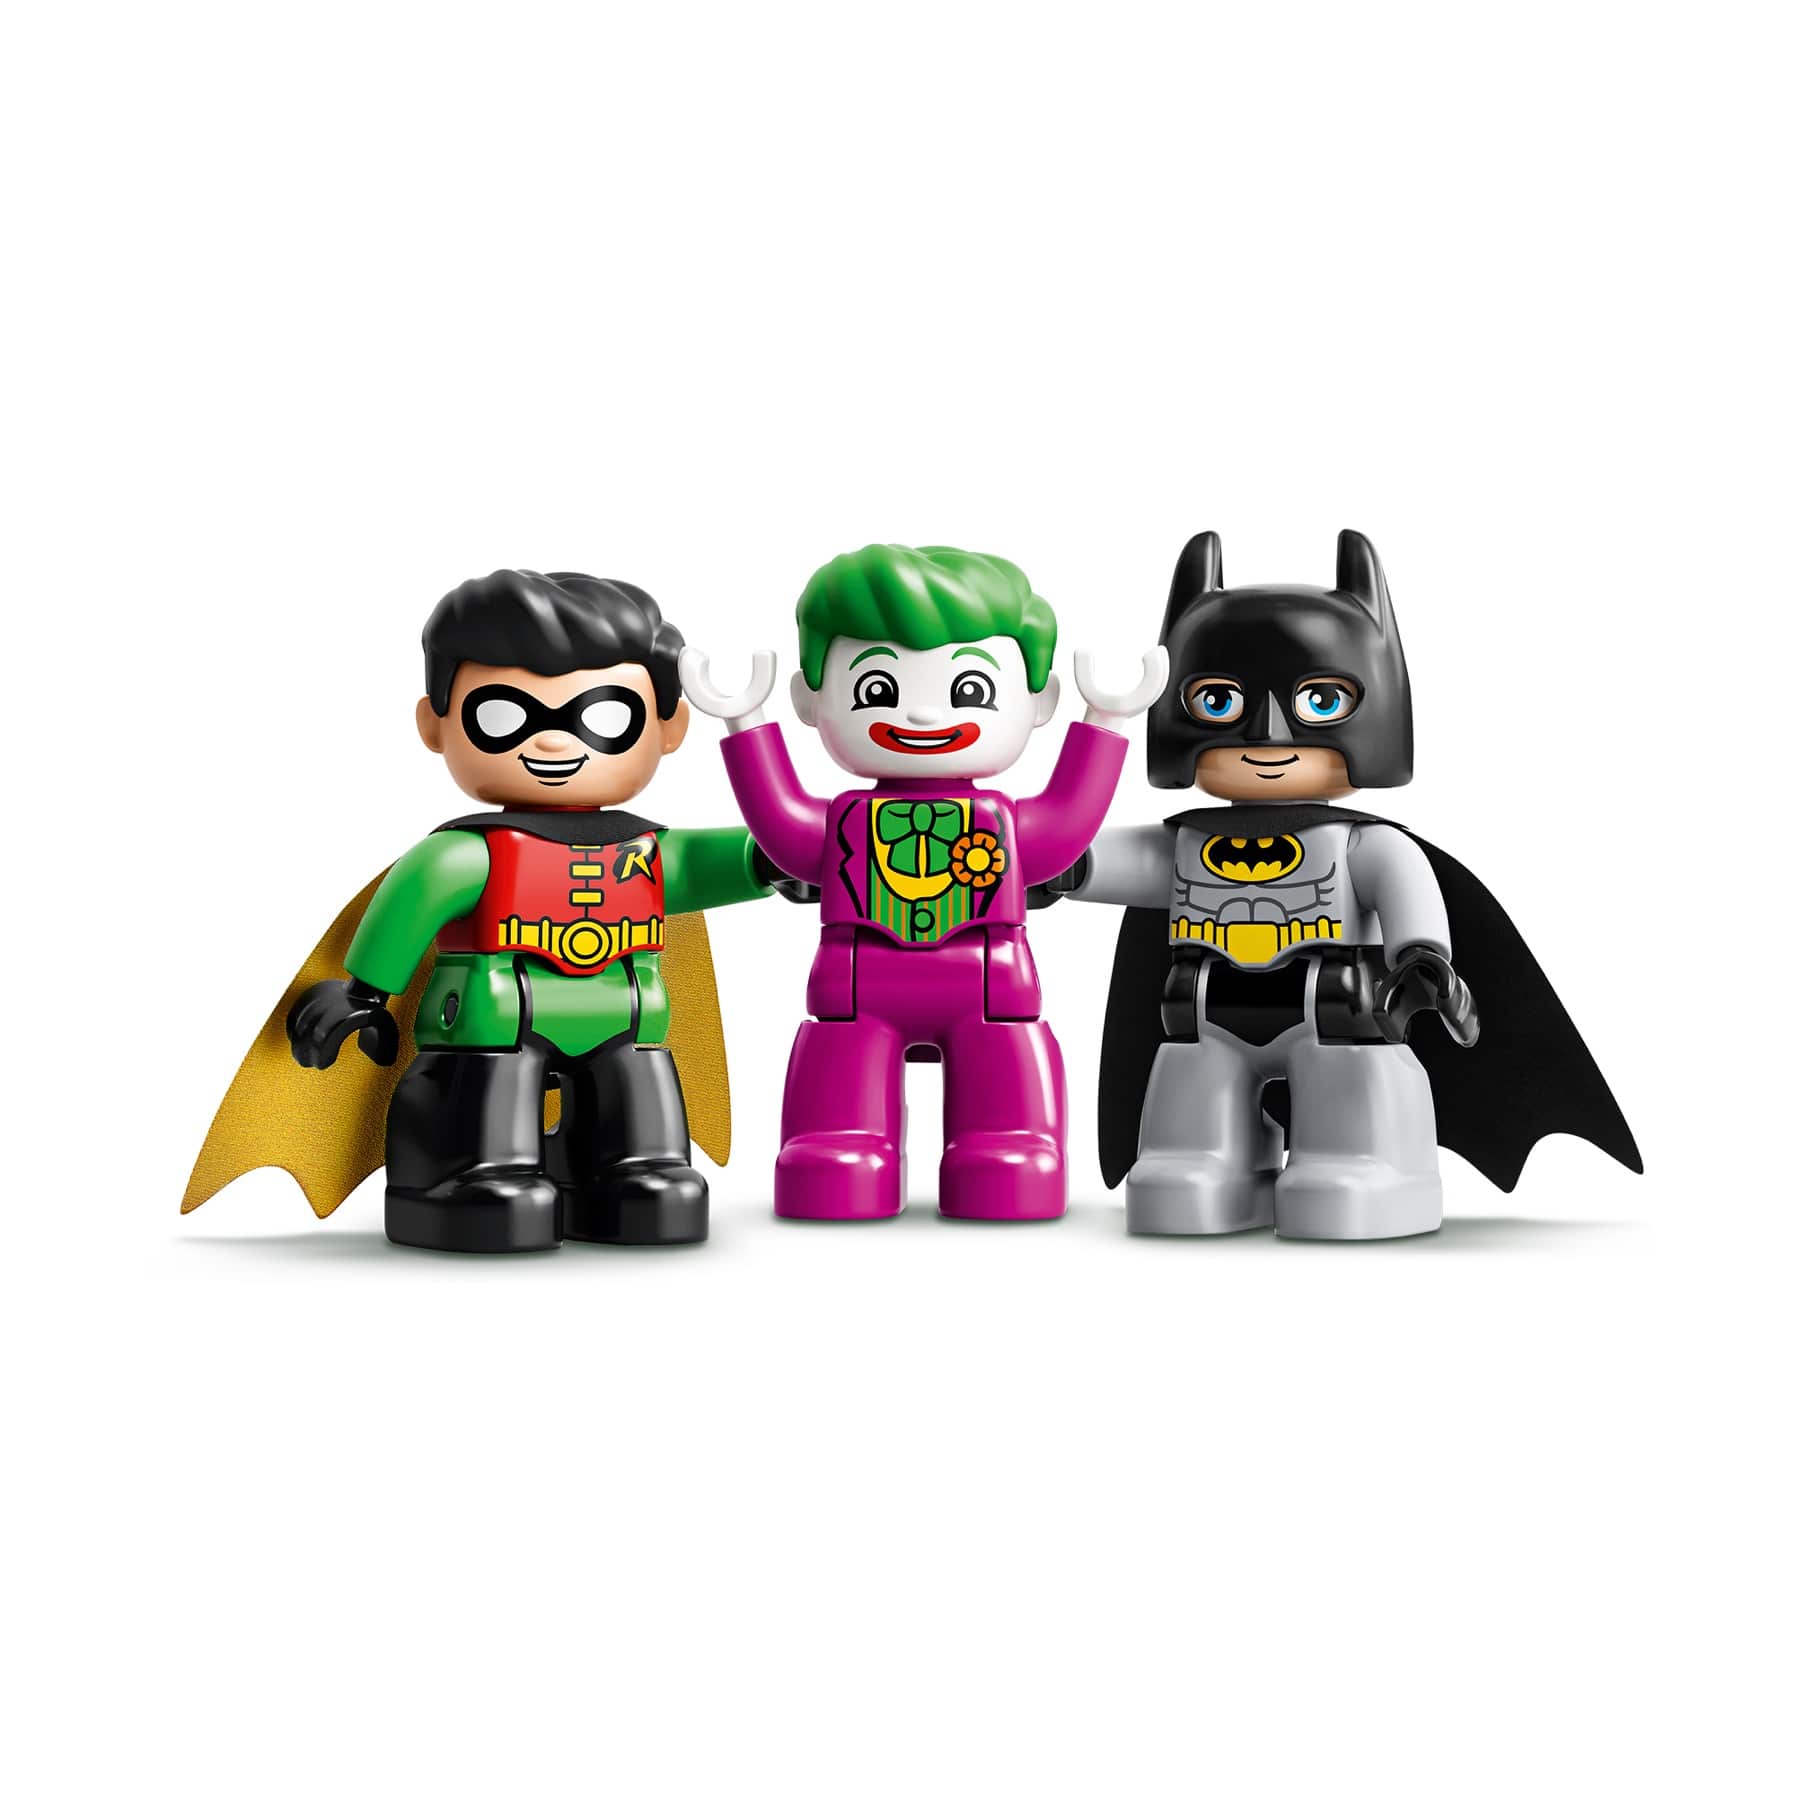 Lego Duplo Dc Batman Batcave 33